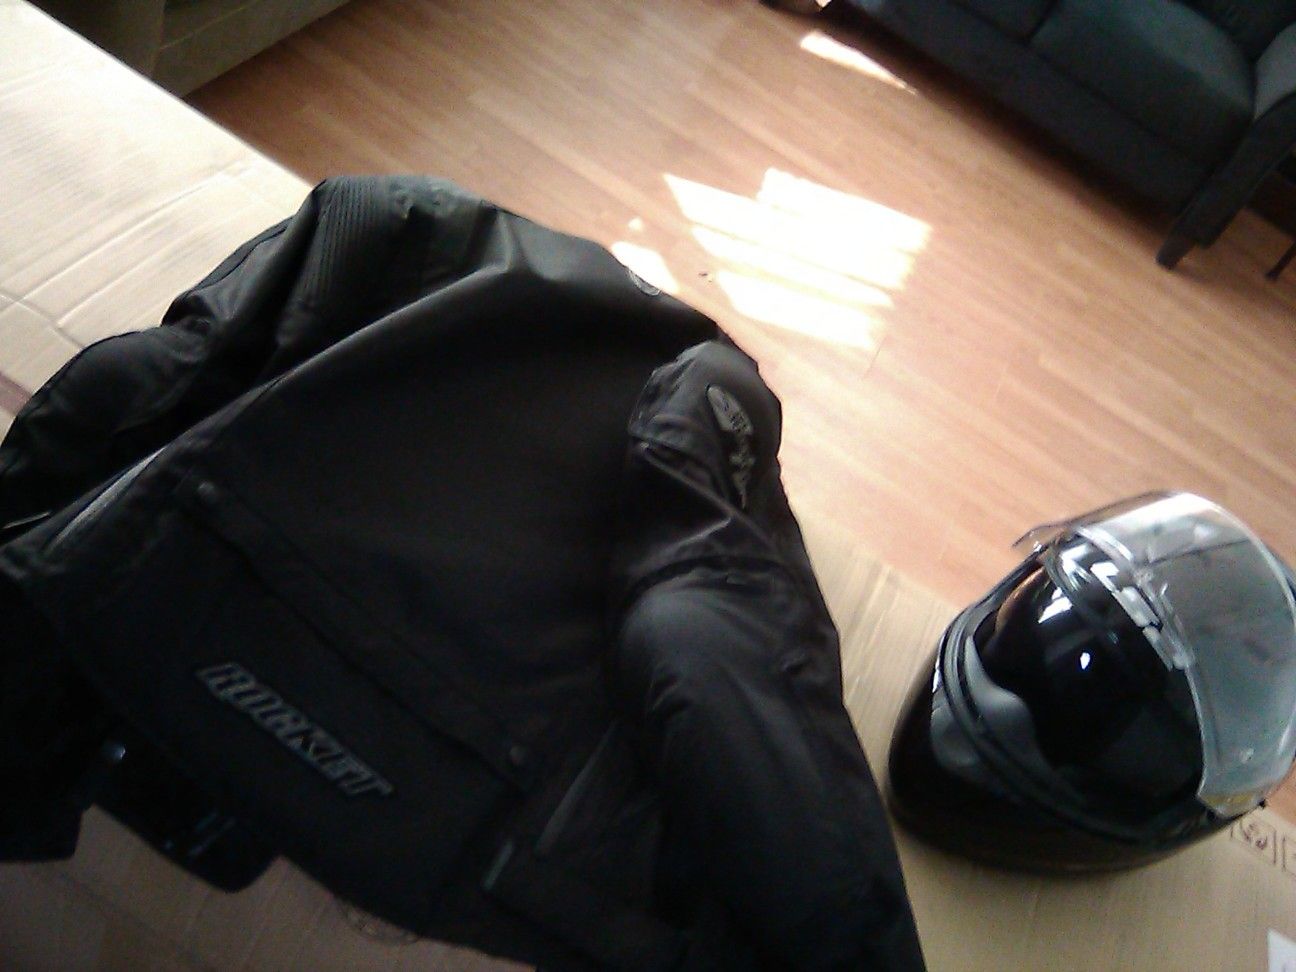 Size L) Joe rocket motorcycle jacket with a motorcycle helmet ( size L)